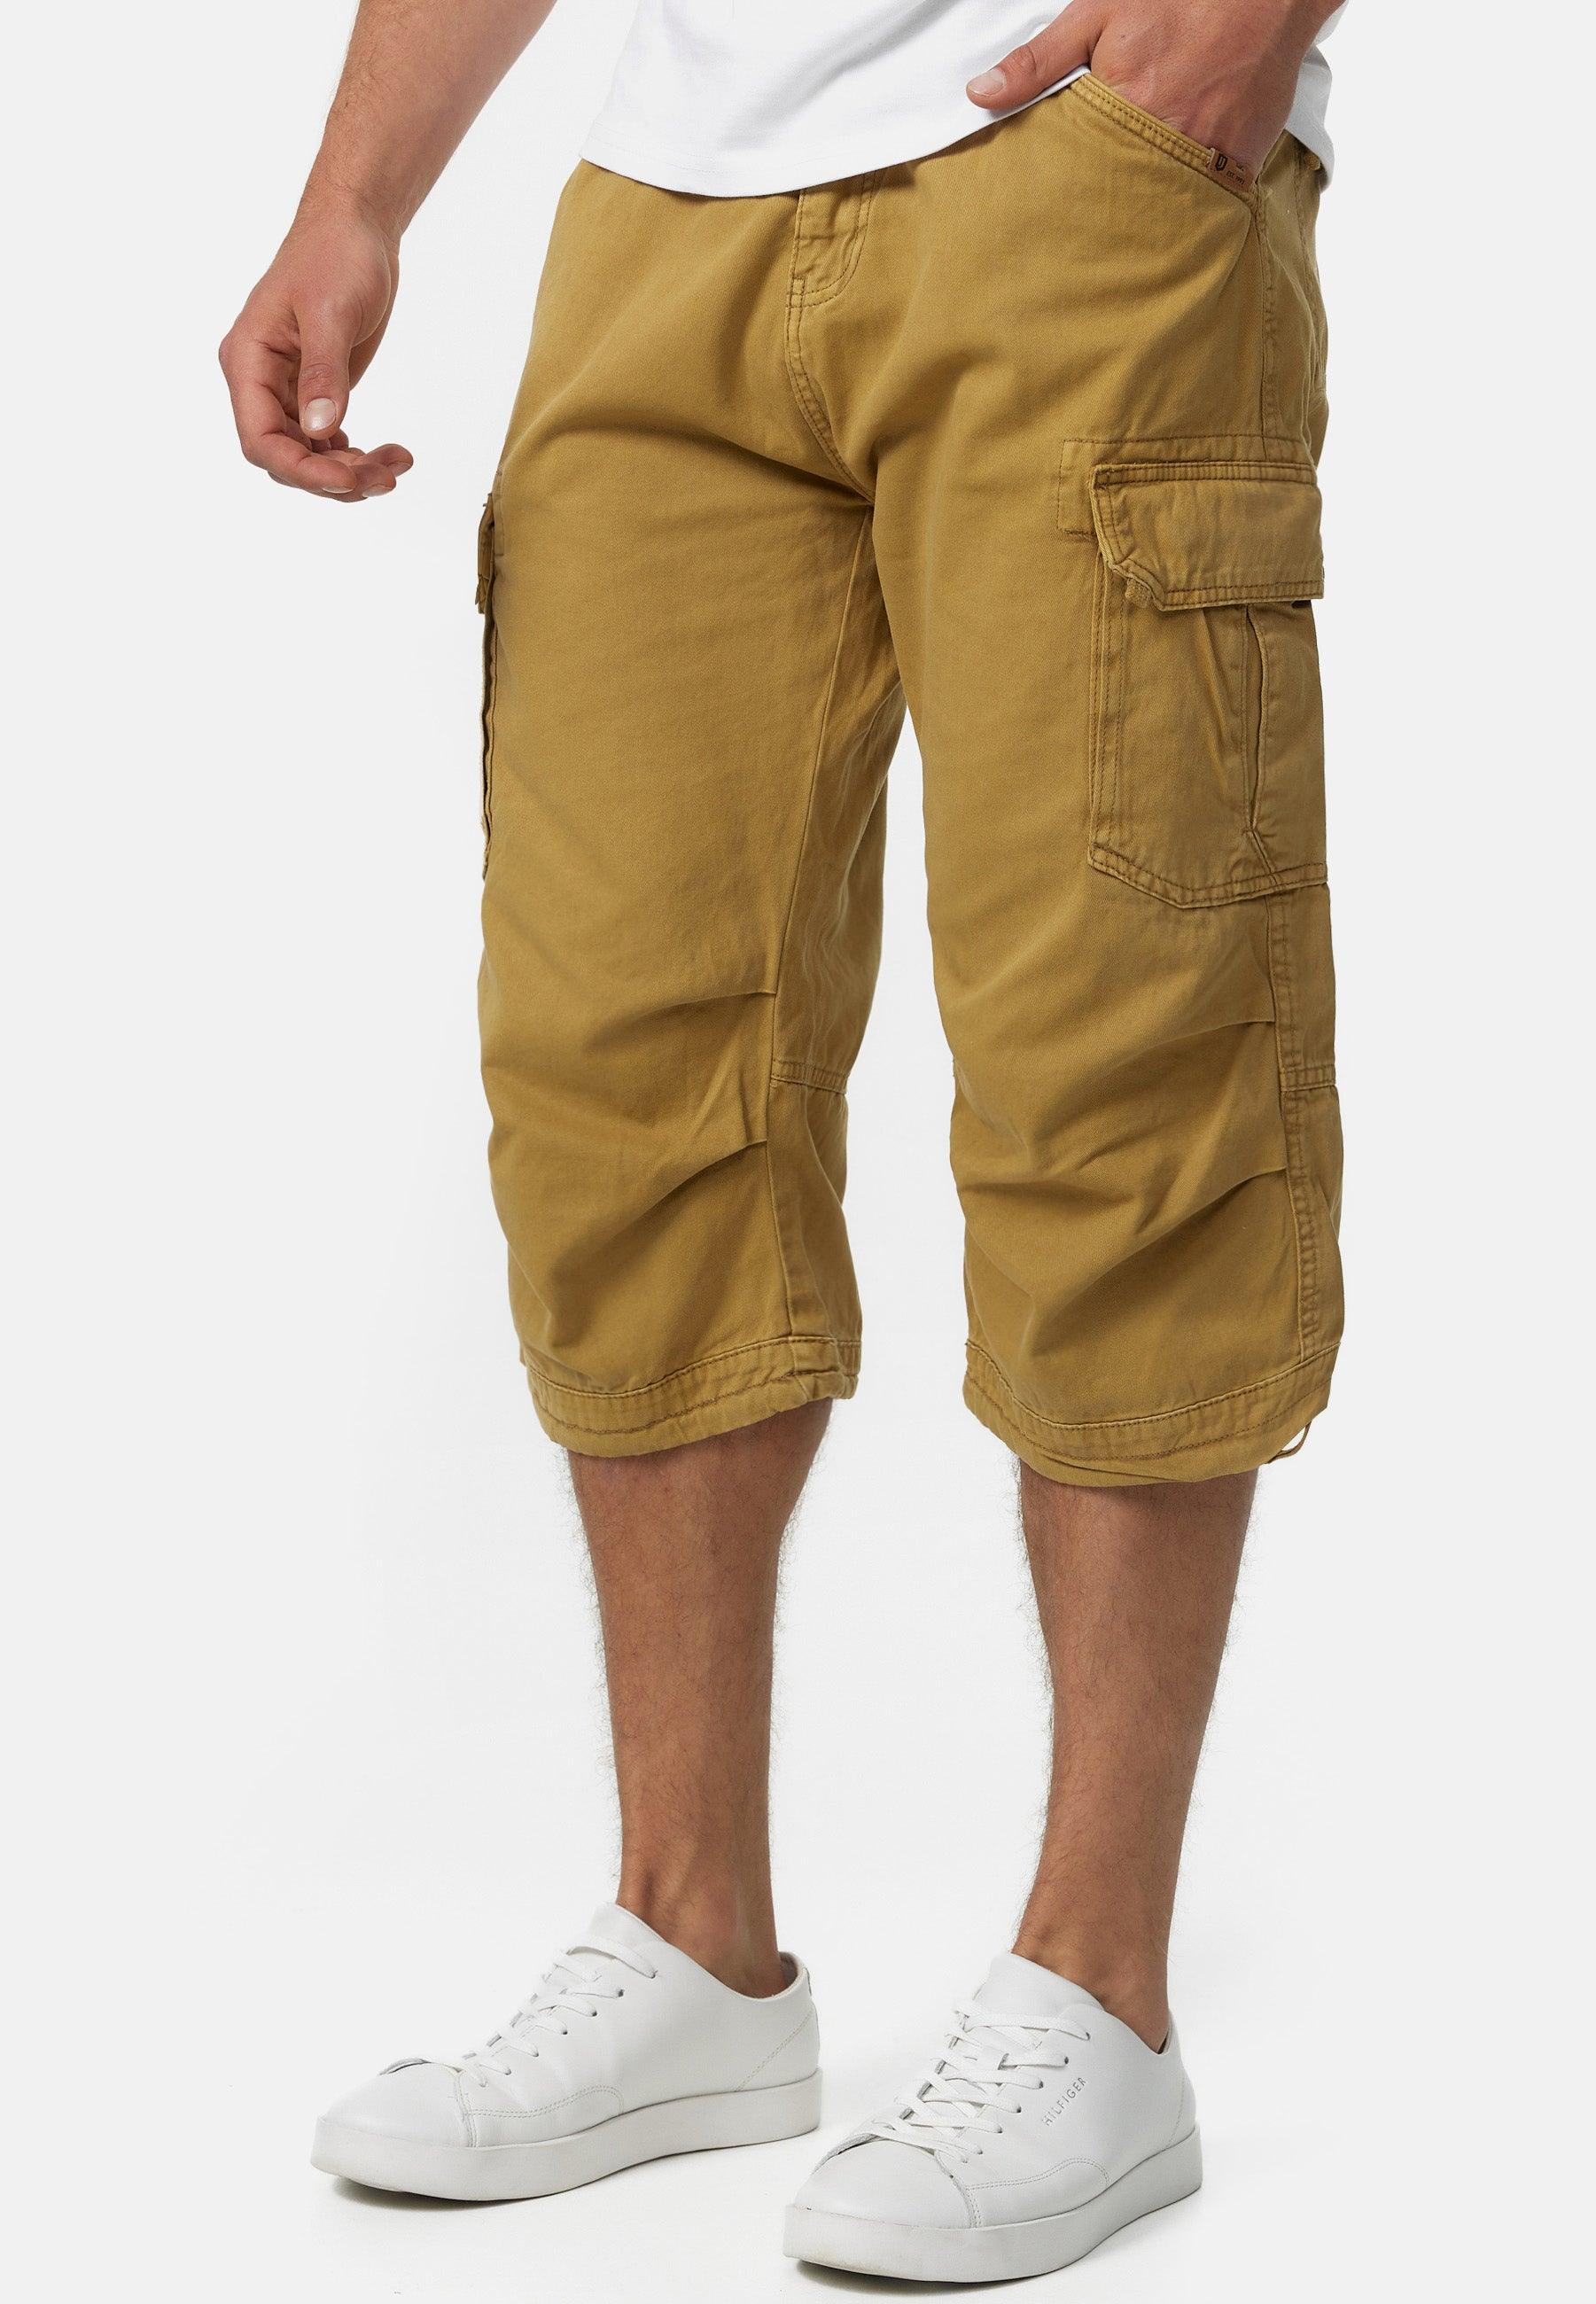 Men's Shorts, Pants and Aladdin Shorts - Toonzshop